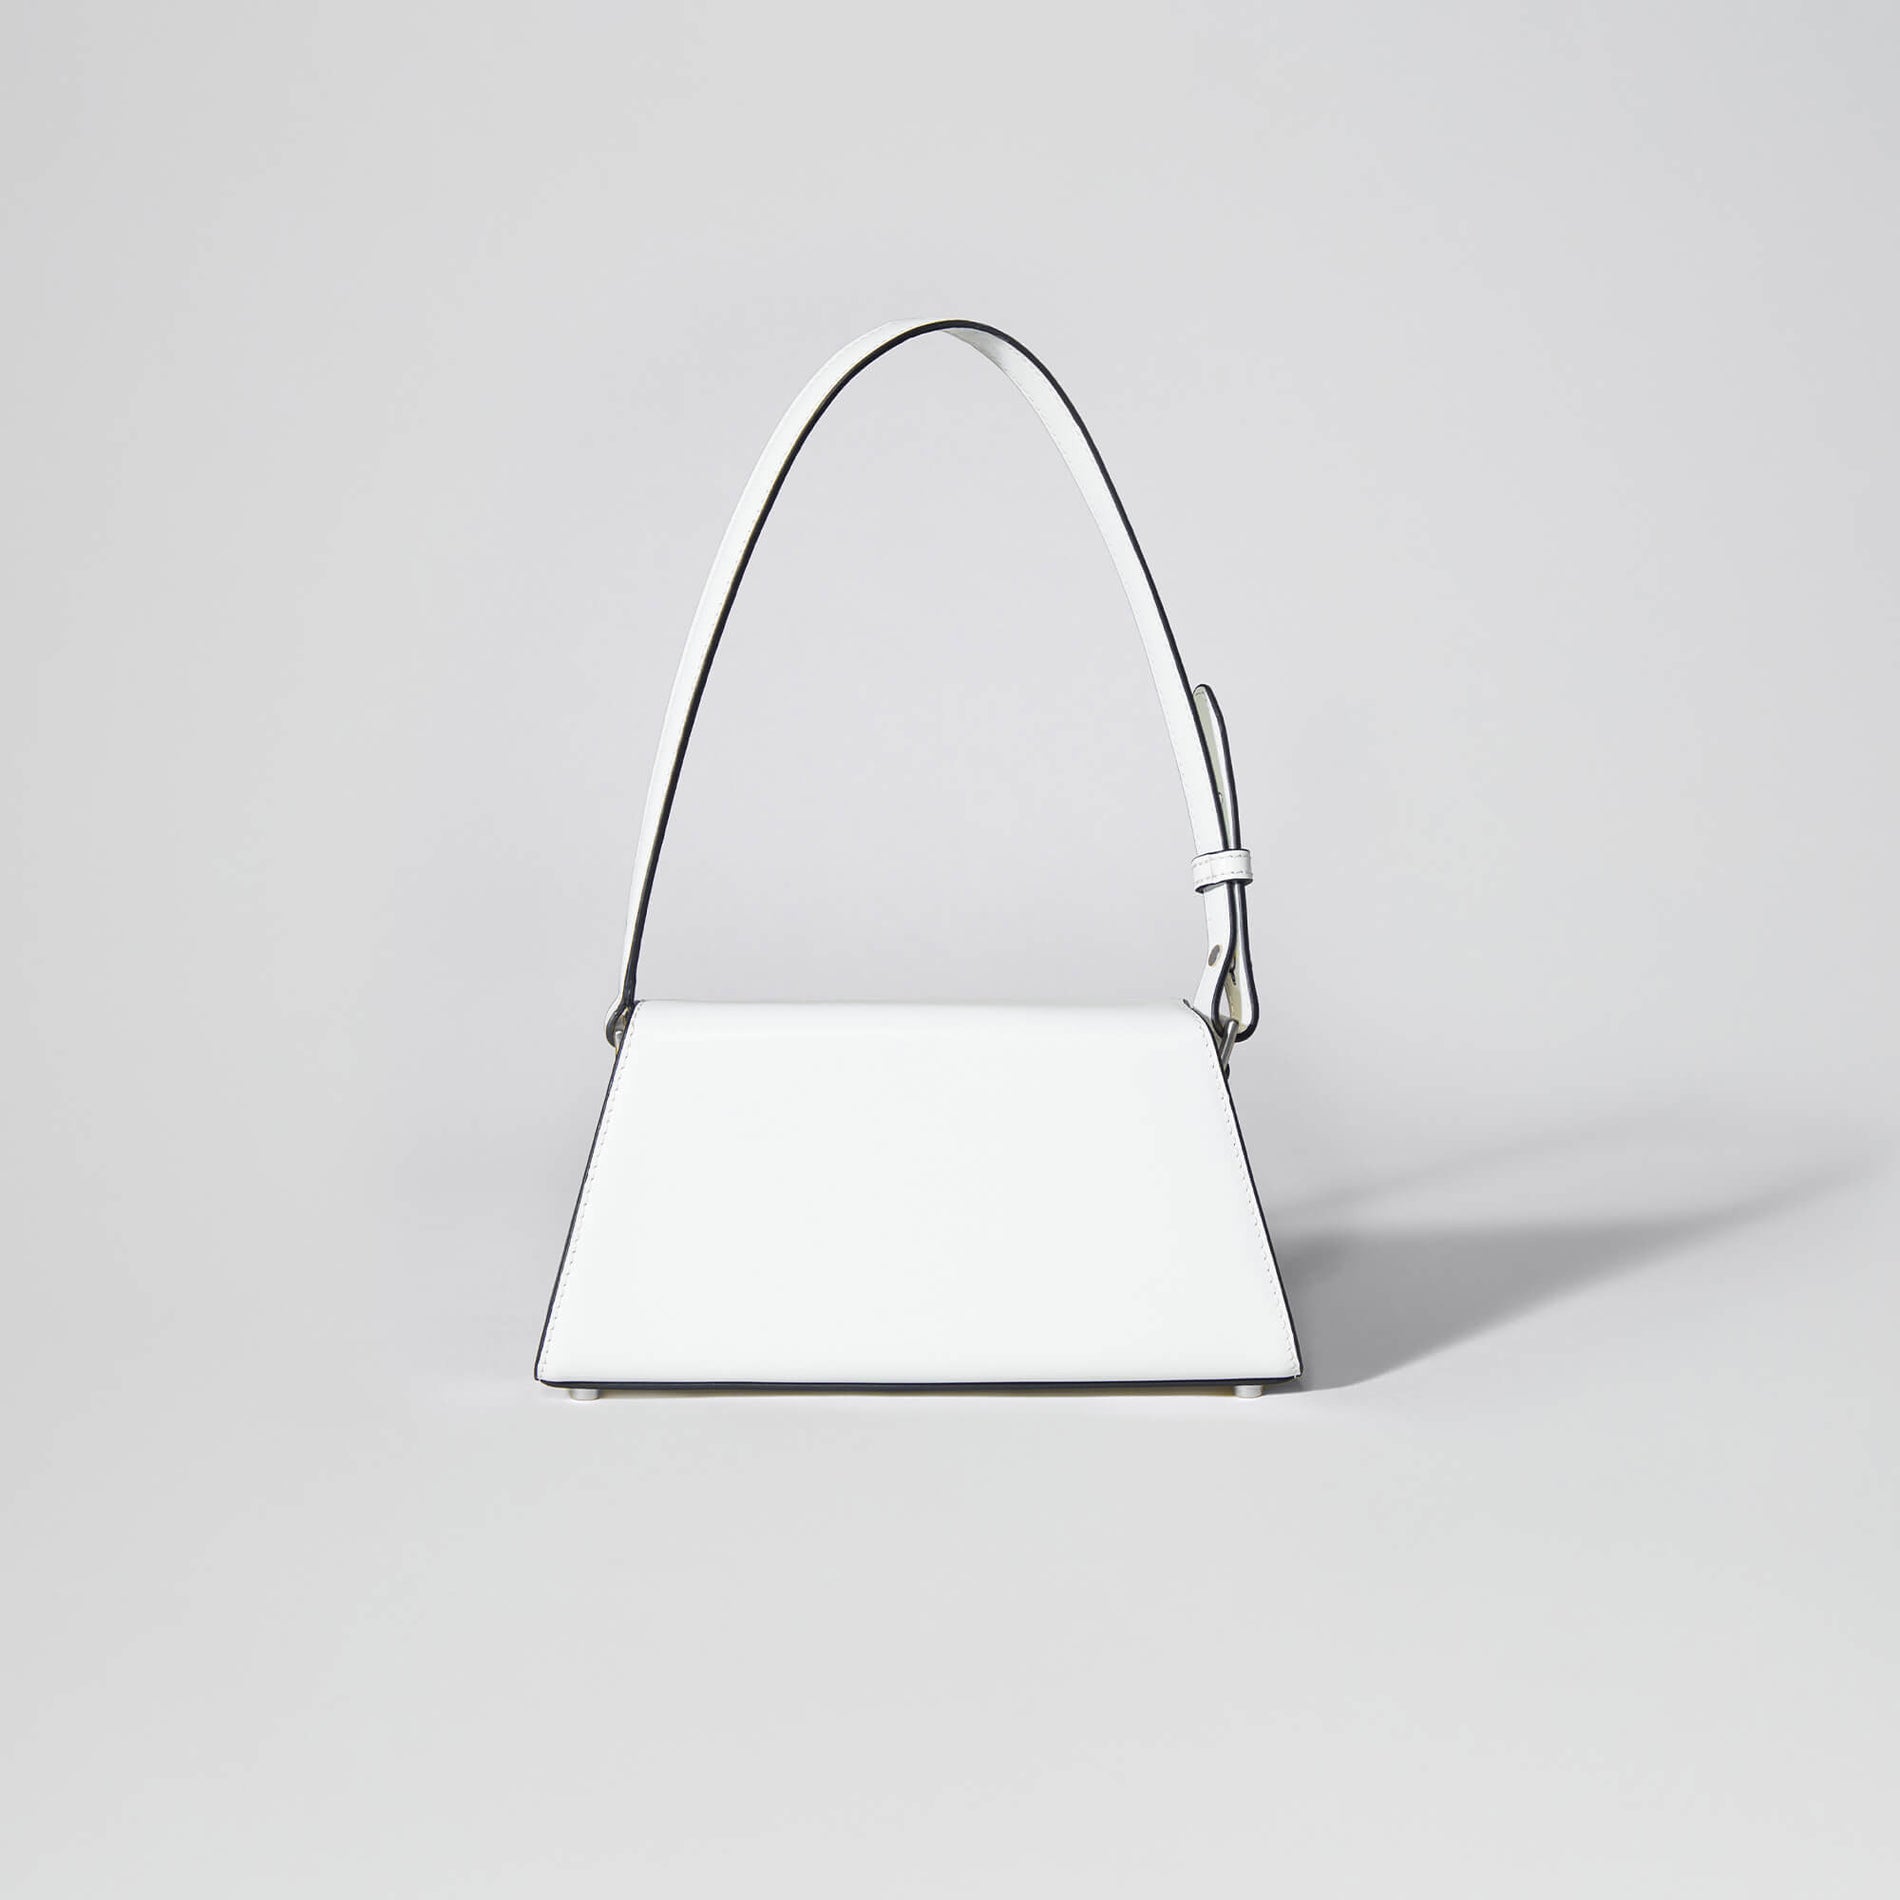 White Pearl Bow Mini Shoulder Bag